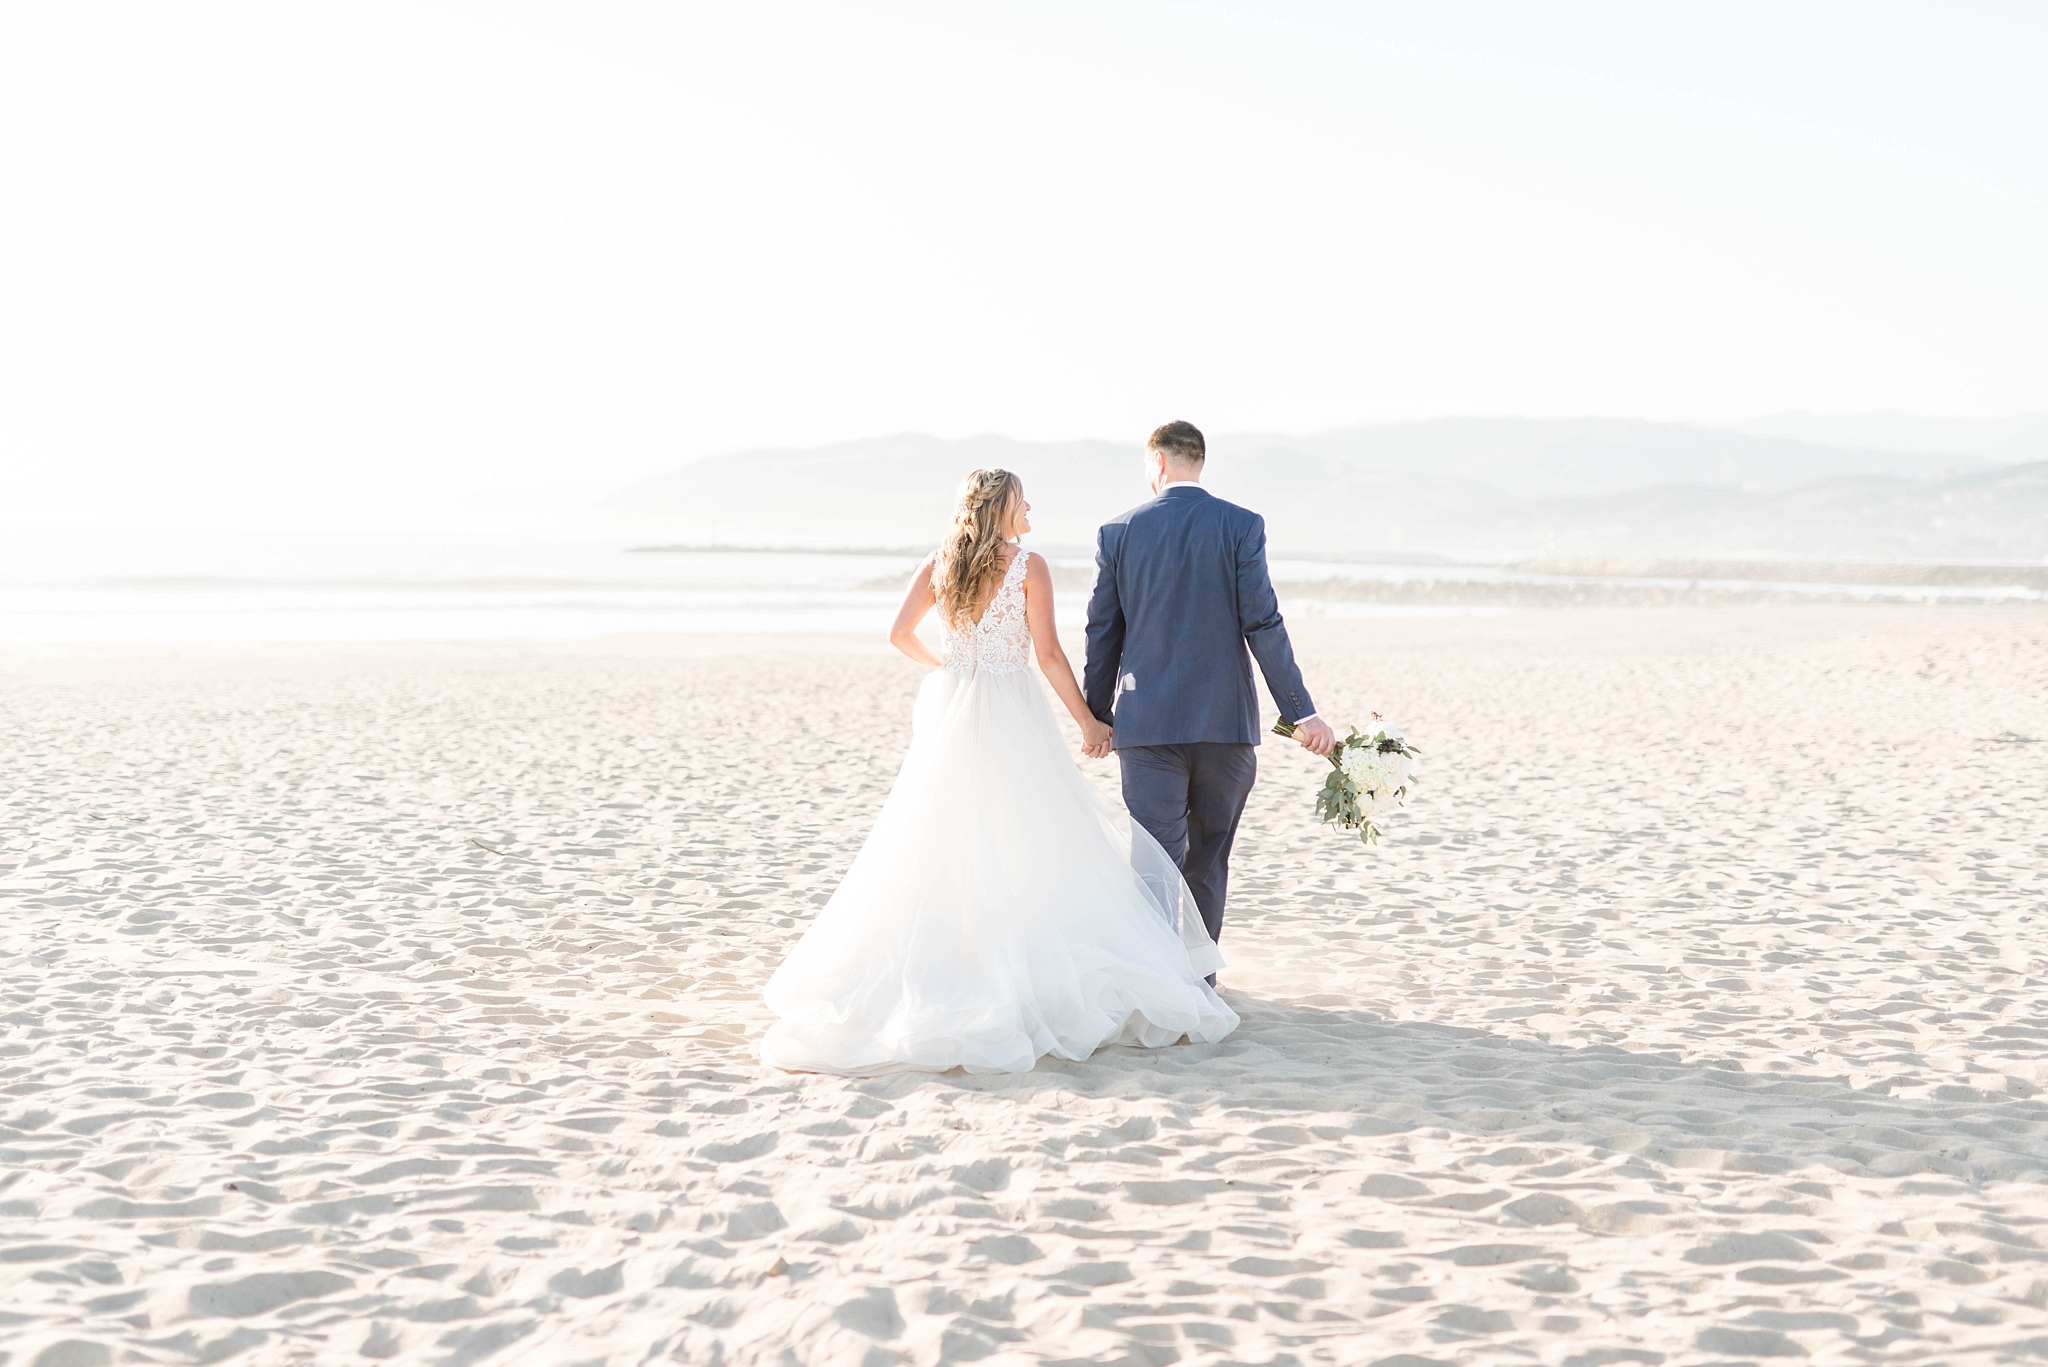 Best Tips for Planning a Beach Wedding